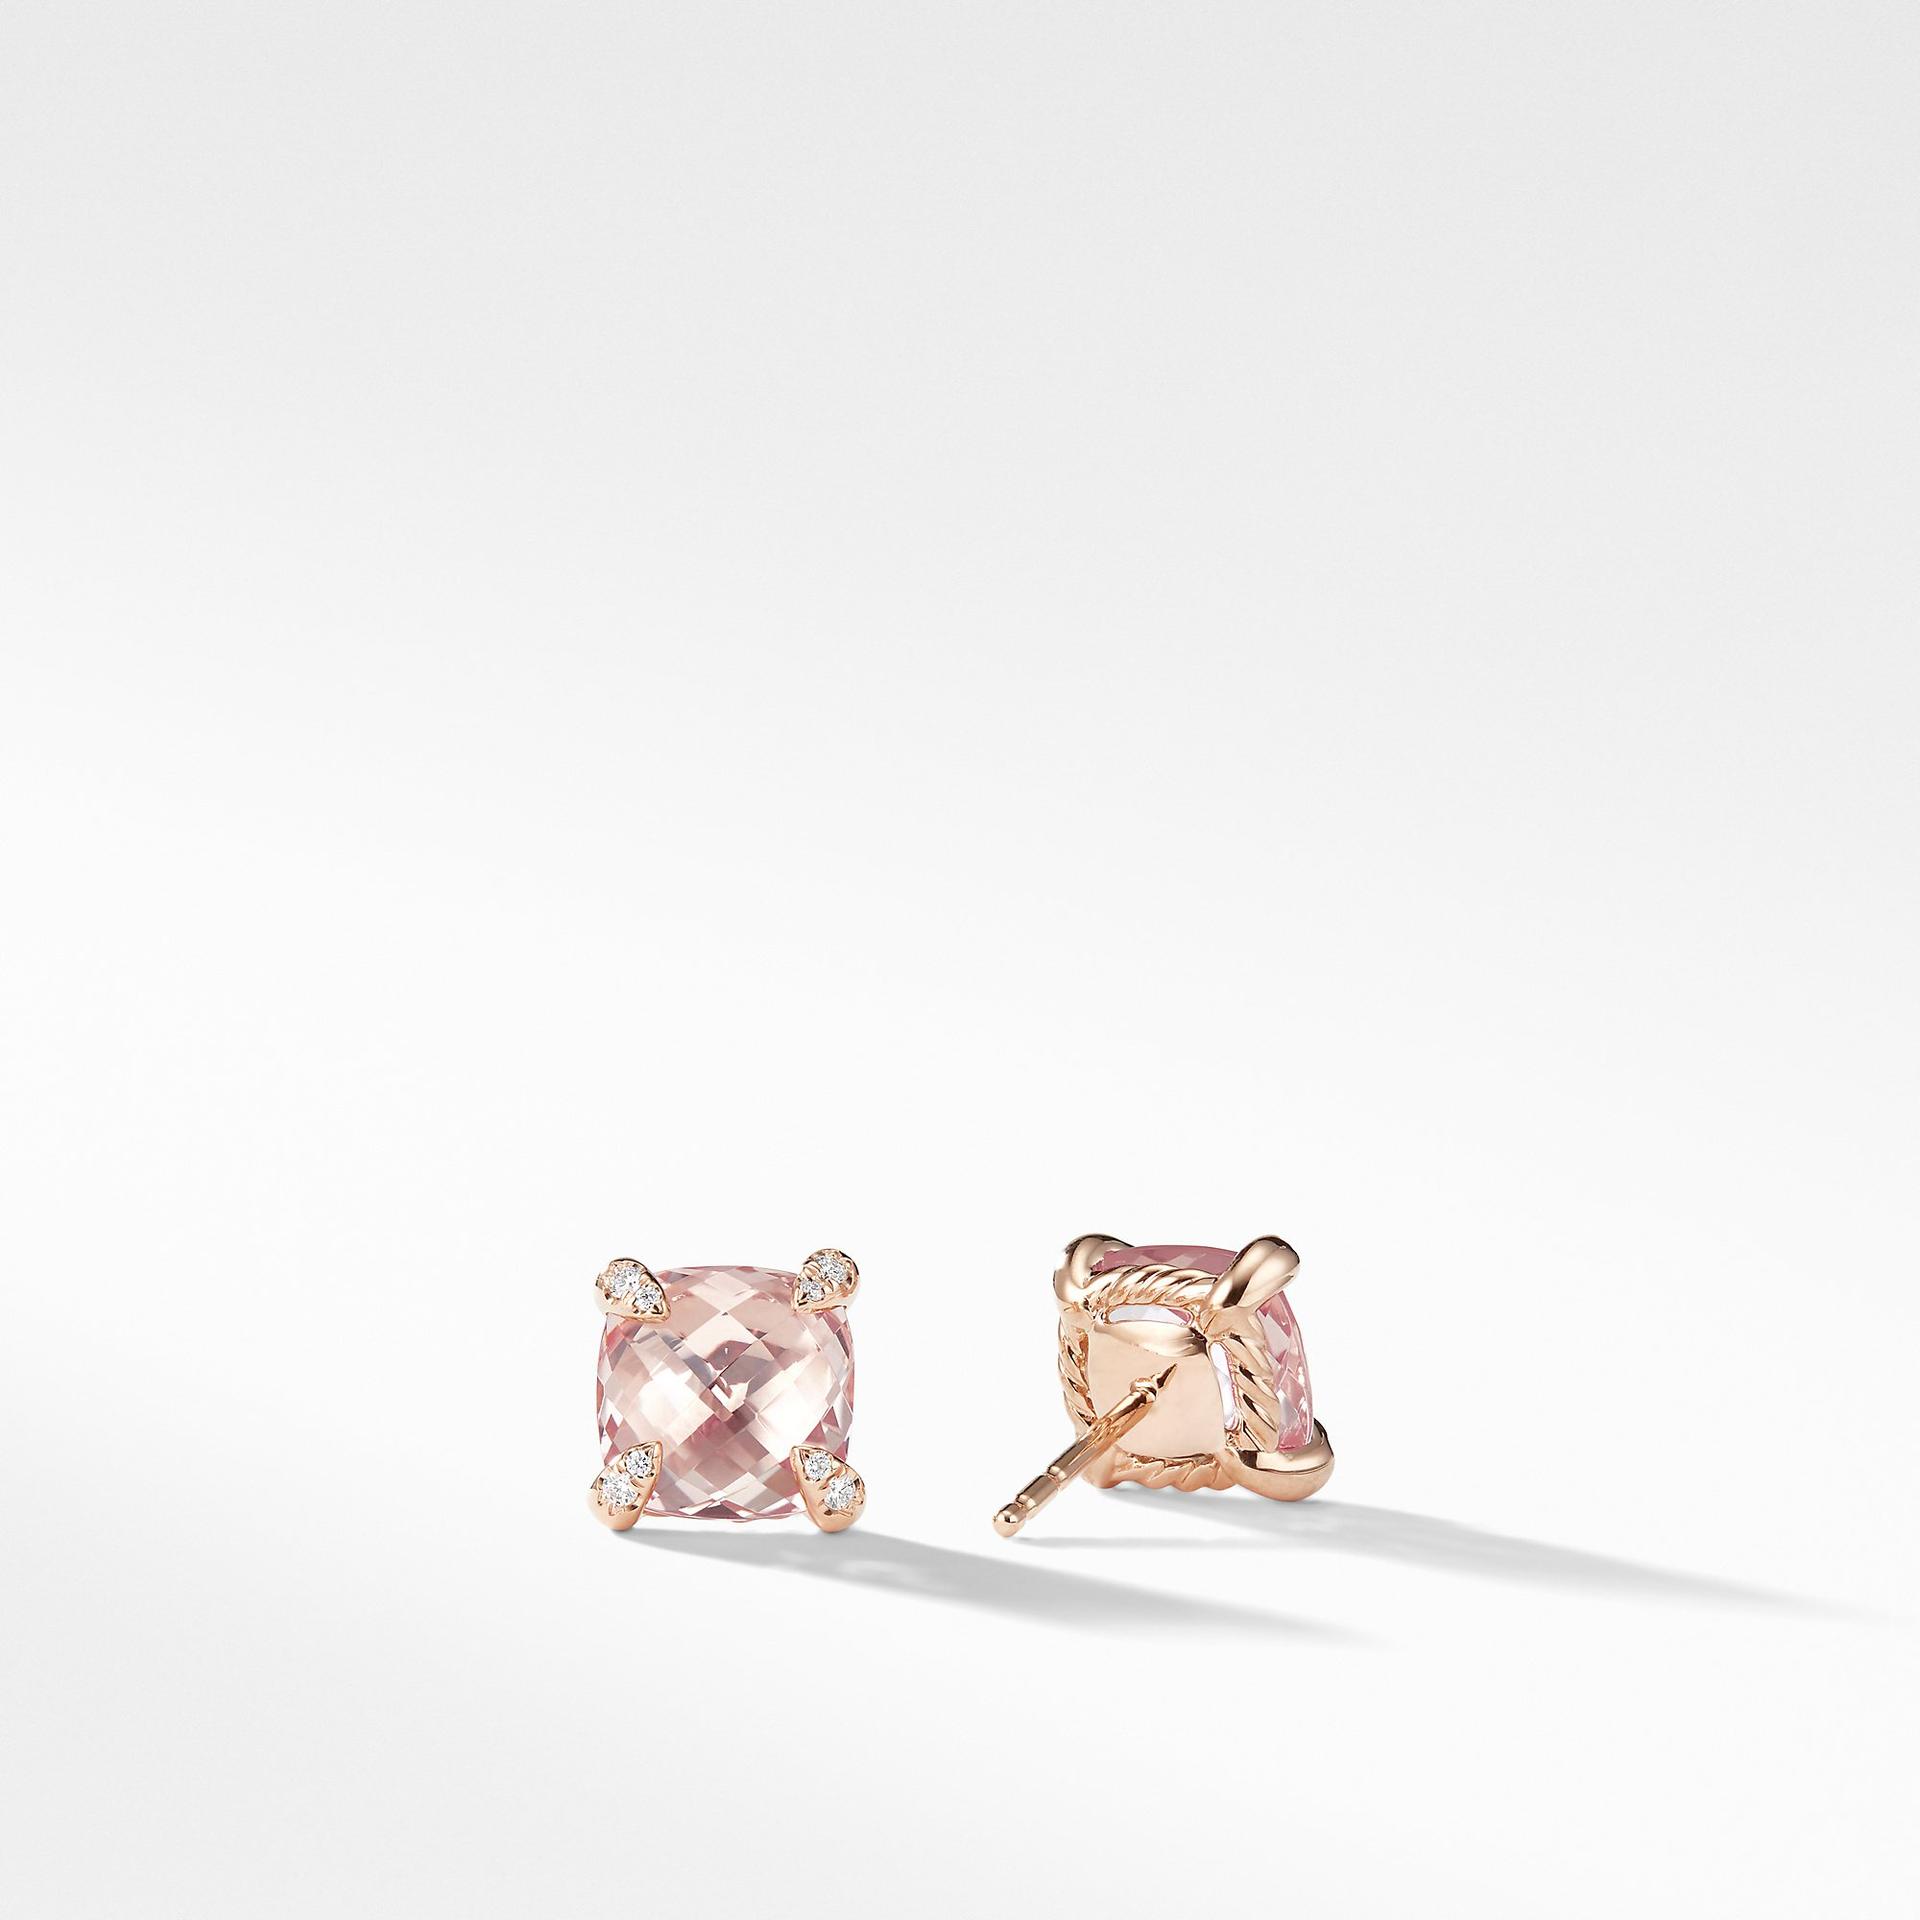 David Yurman Chatelaine Stud Earrings with Morganite and Diamonds in 18K Rose Gold 1